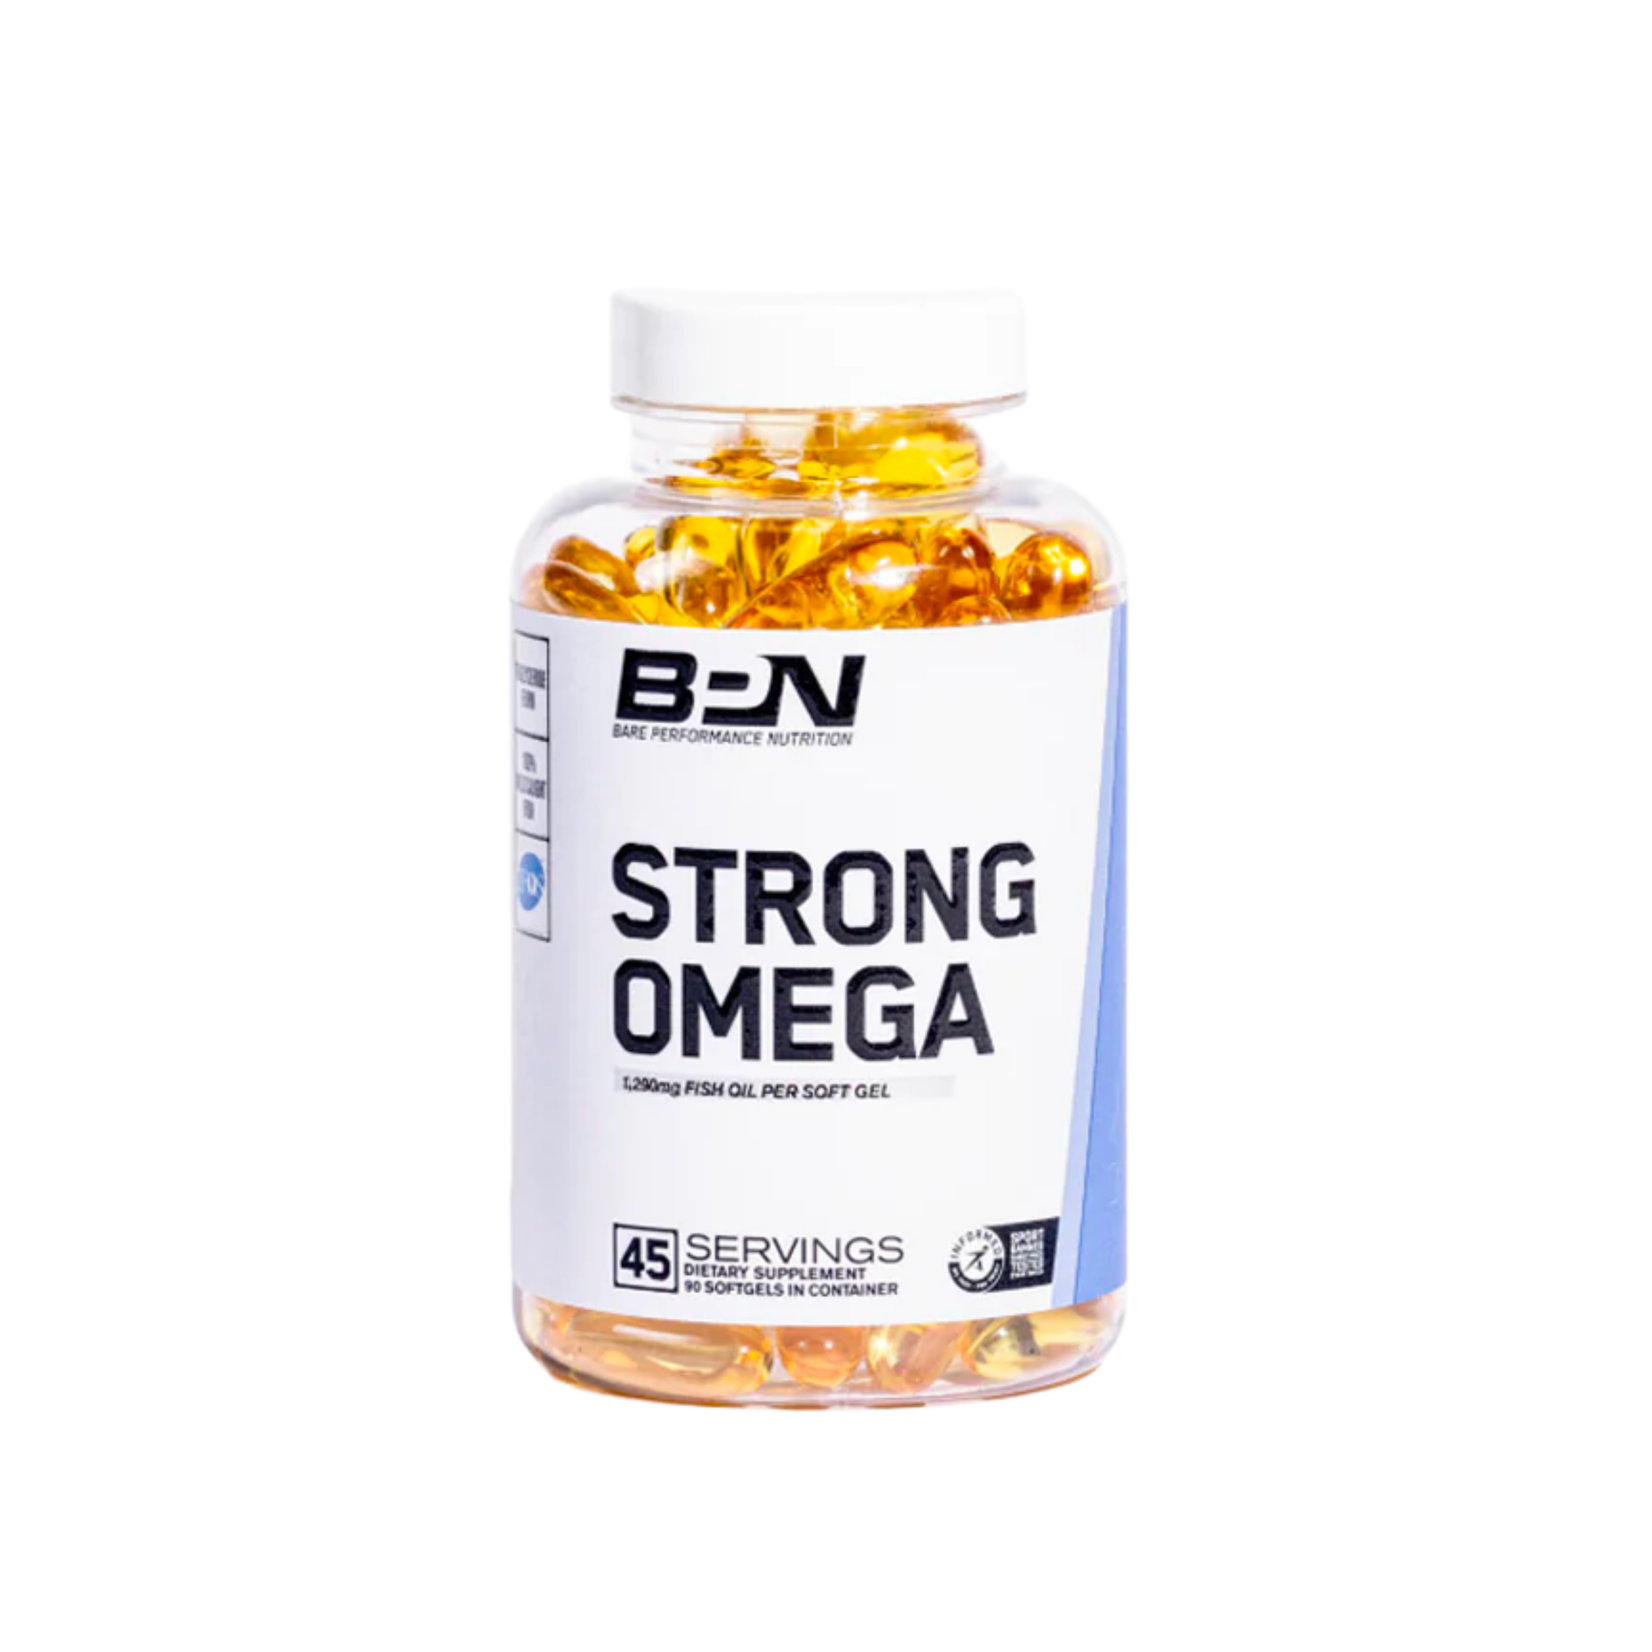 Bare Performance Nutrition BPN Strong Omega